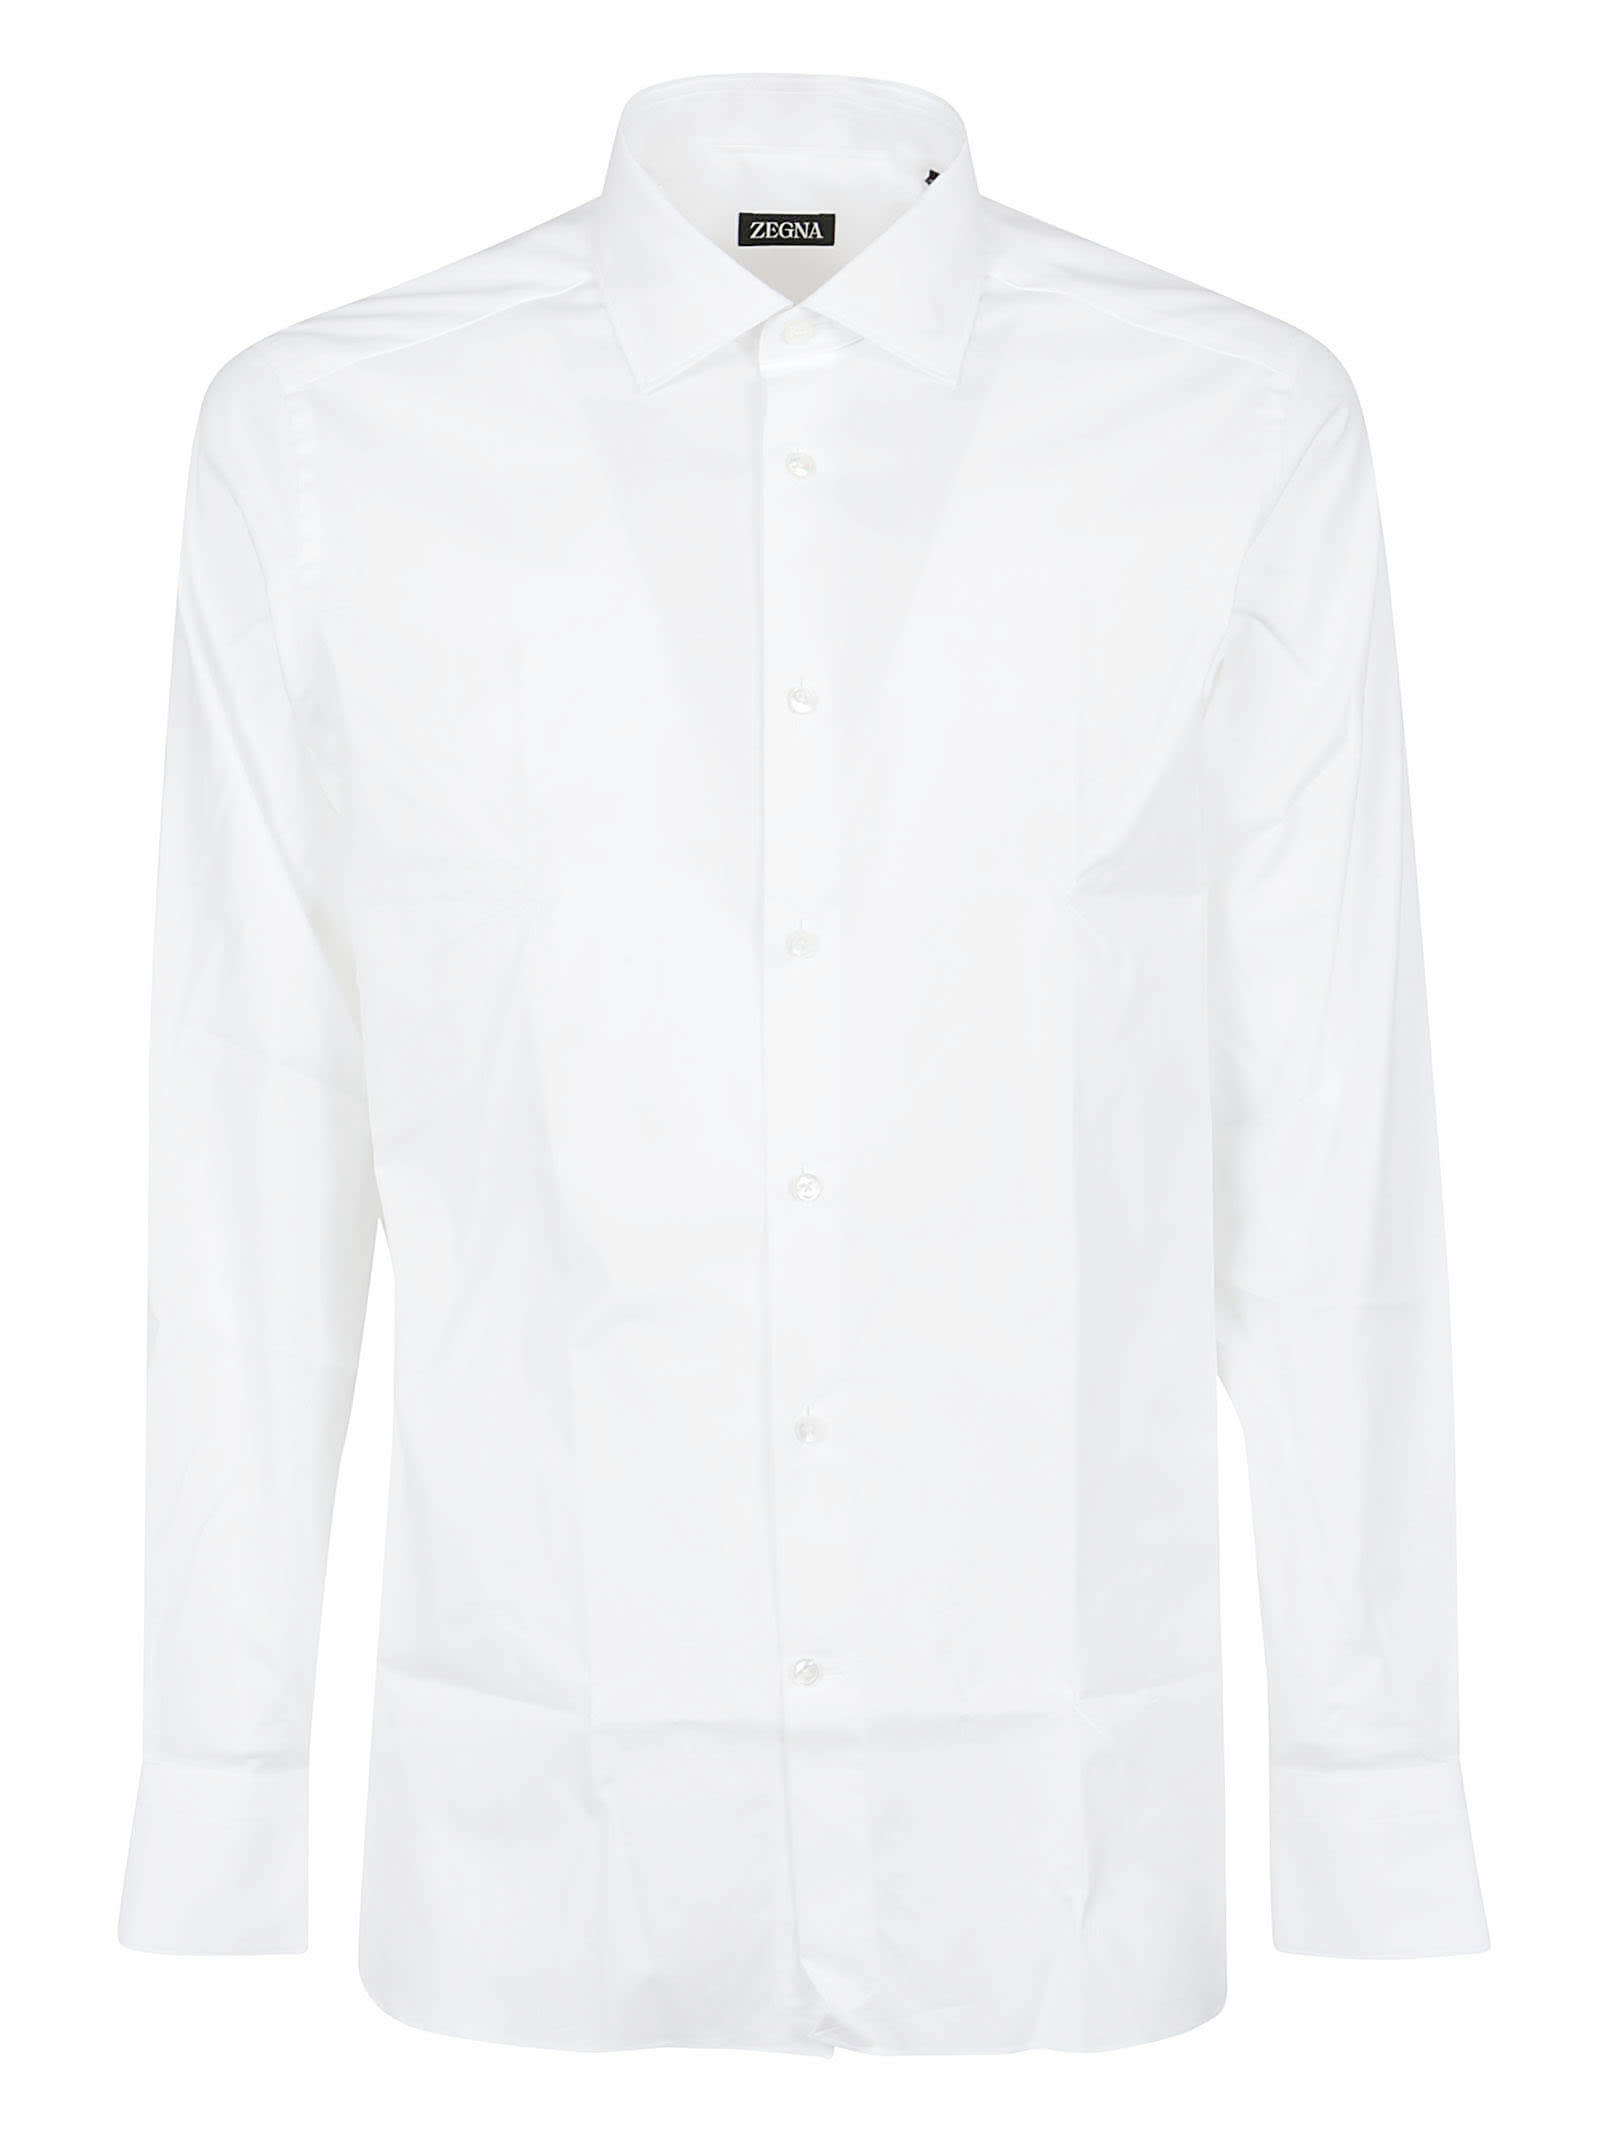 Ermenegildo Zegna Lux Tailoring Long Sleeve Shirt